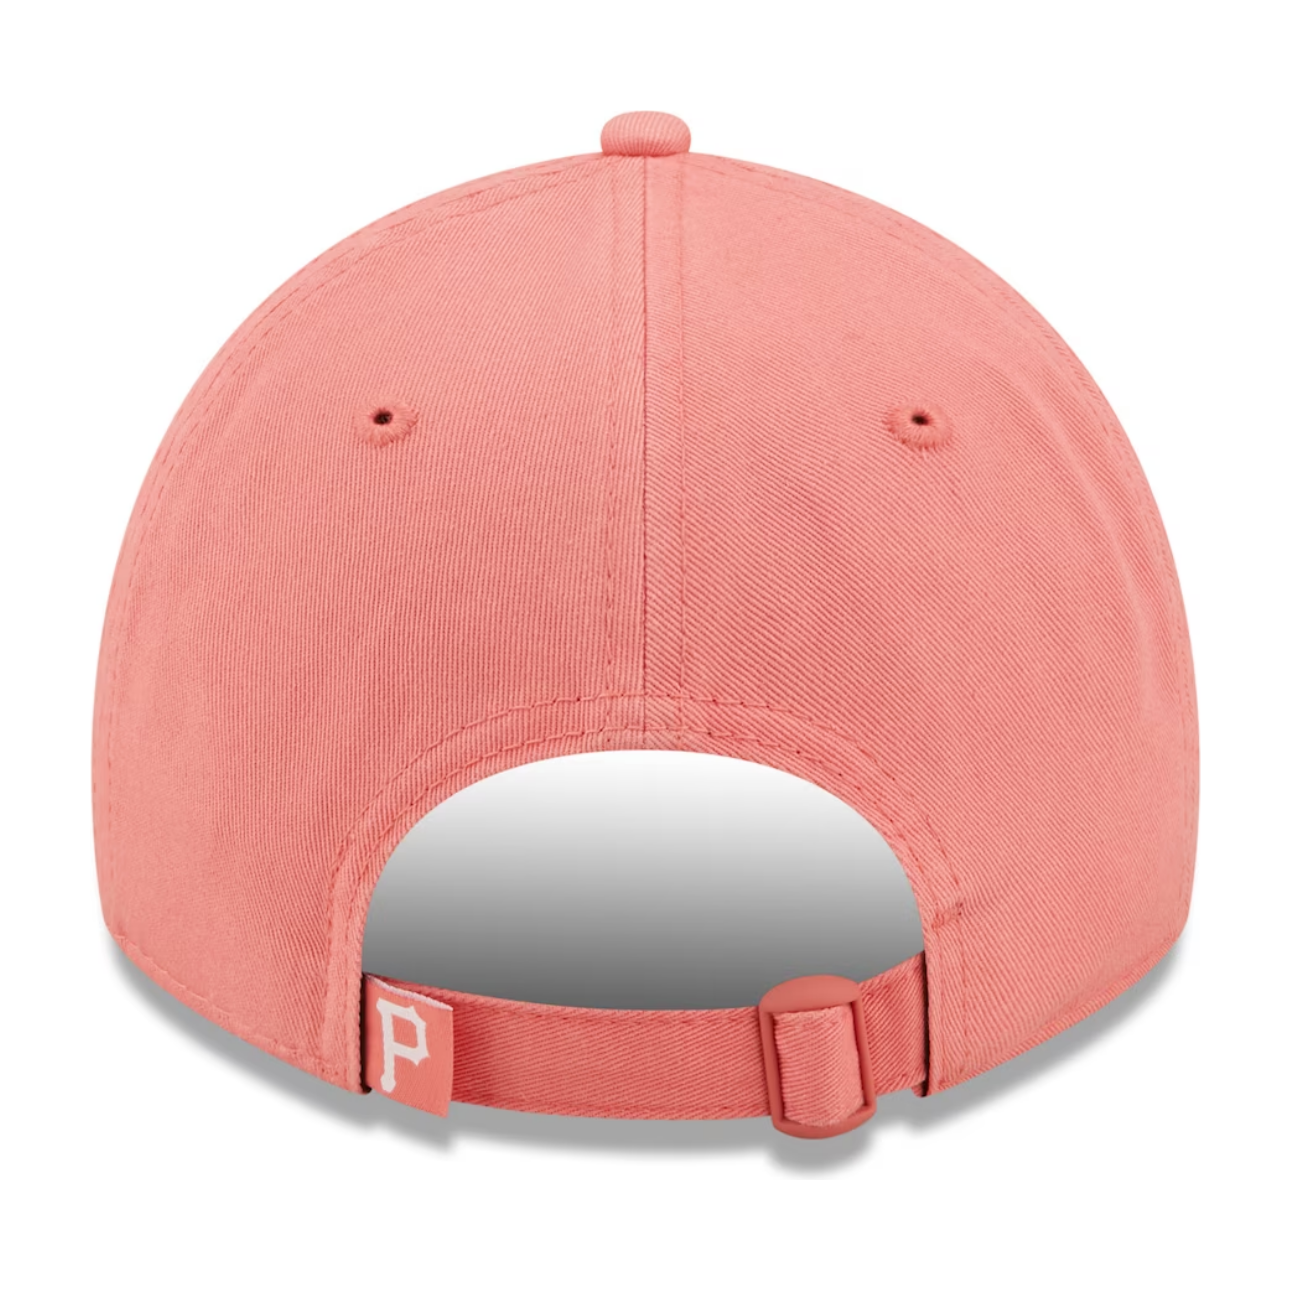 New Era - Pittsburgh Pirates Lift Core Classic 9TWENTY Adjustable Hat - Pink